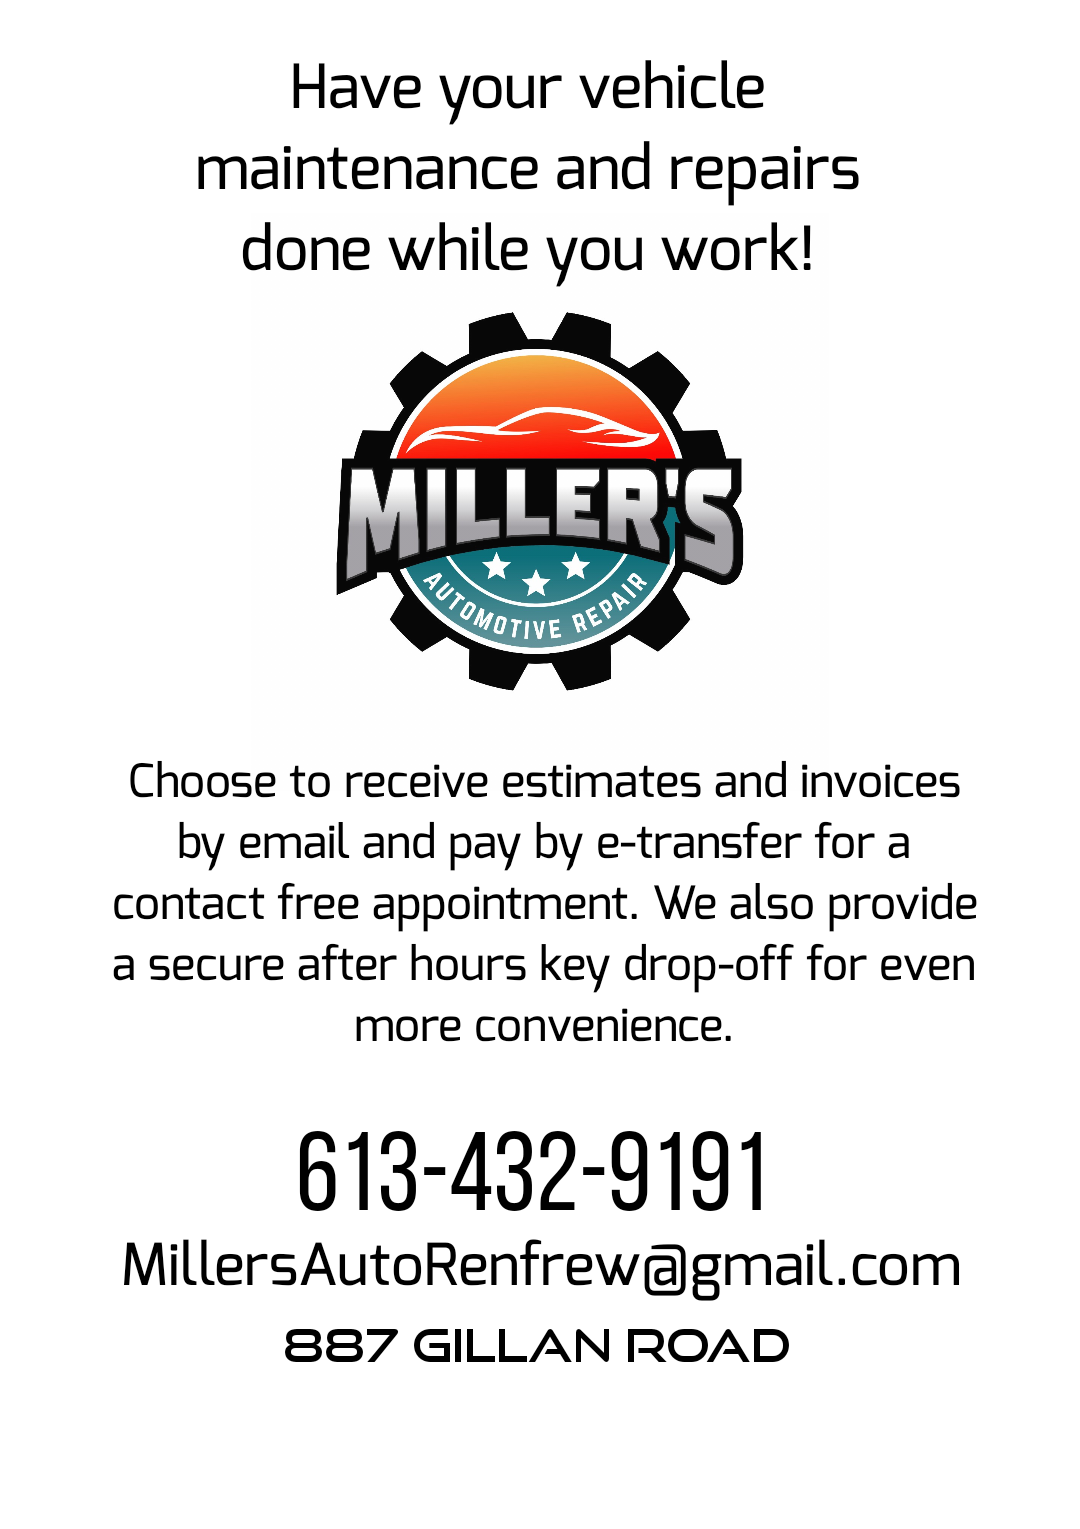 Miller's Automotive Repair 887 Gillan Rd, Renfrew Ontario K7V 3Z4